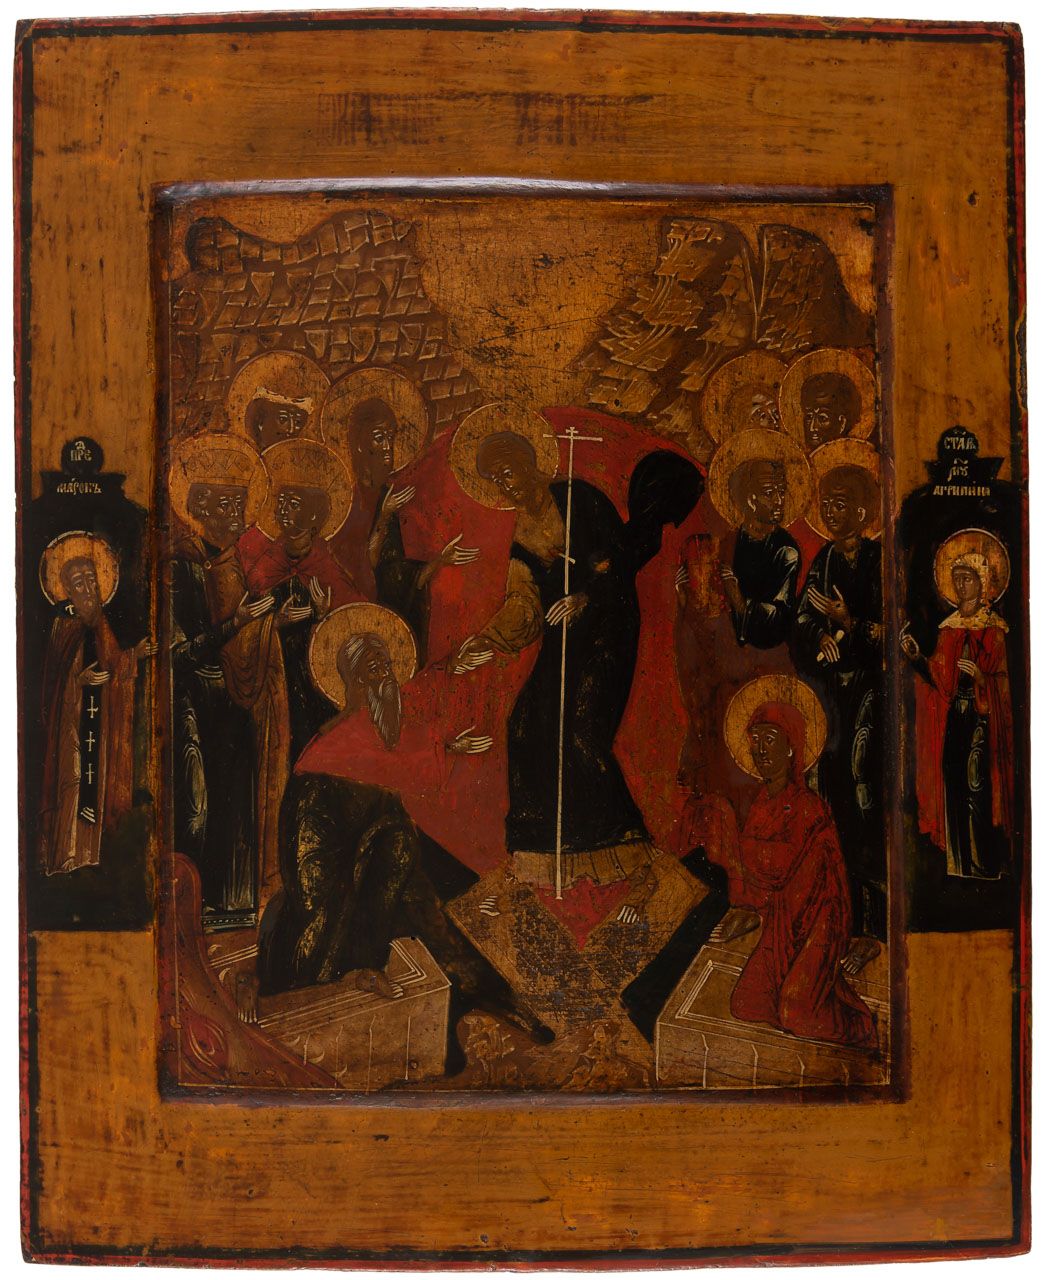 HADESFAHRT CHRISTI 带有Anastasis图案的俄罗斯复活节图标，18世纪。

33 x 27,5 cm



边缘圣徒：圣马龙、圣阿格里皮纳